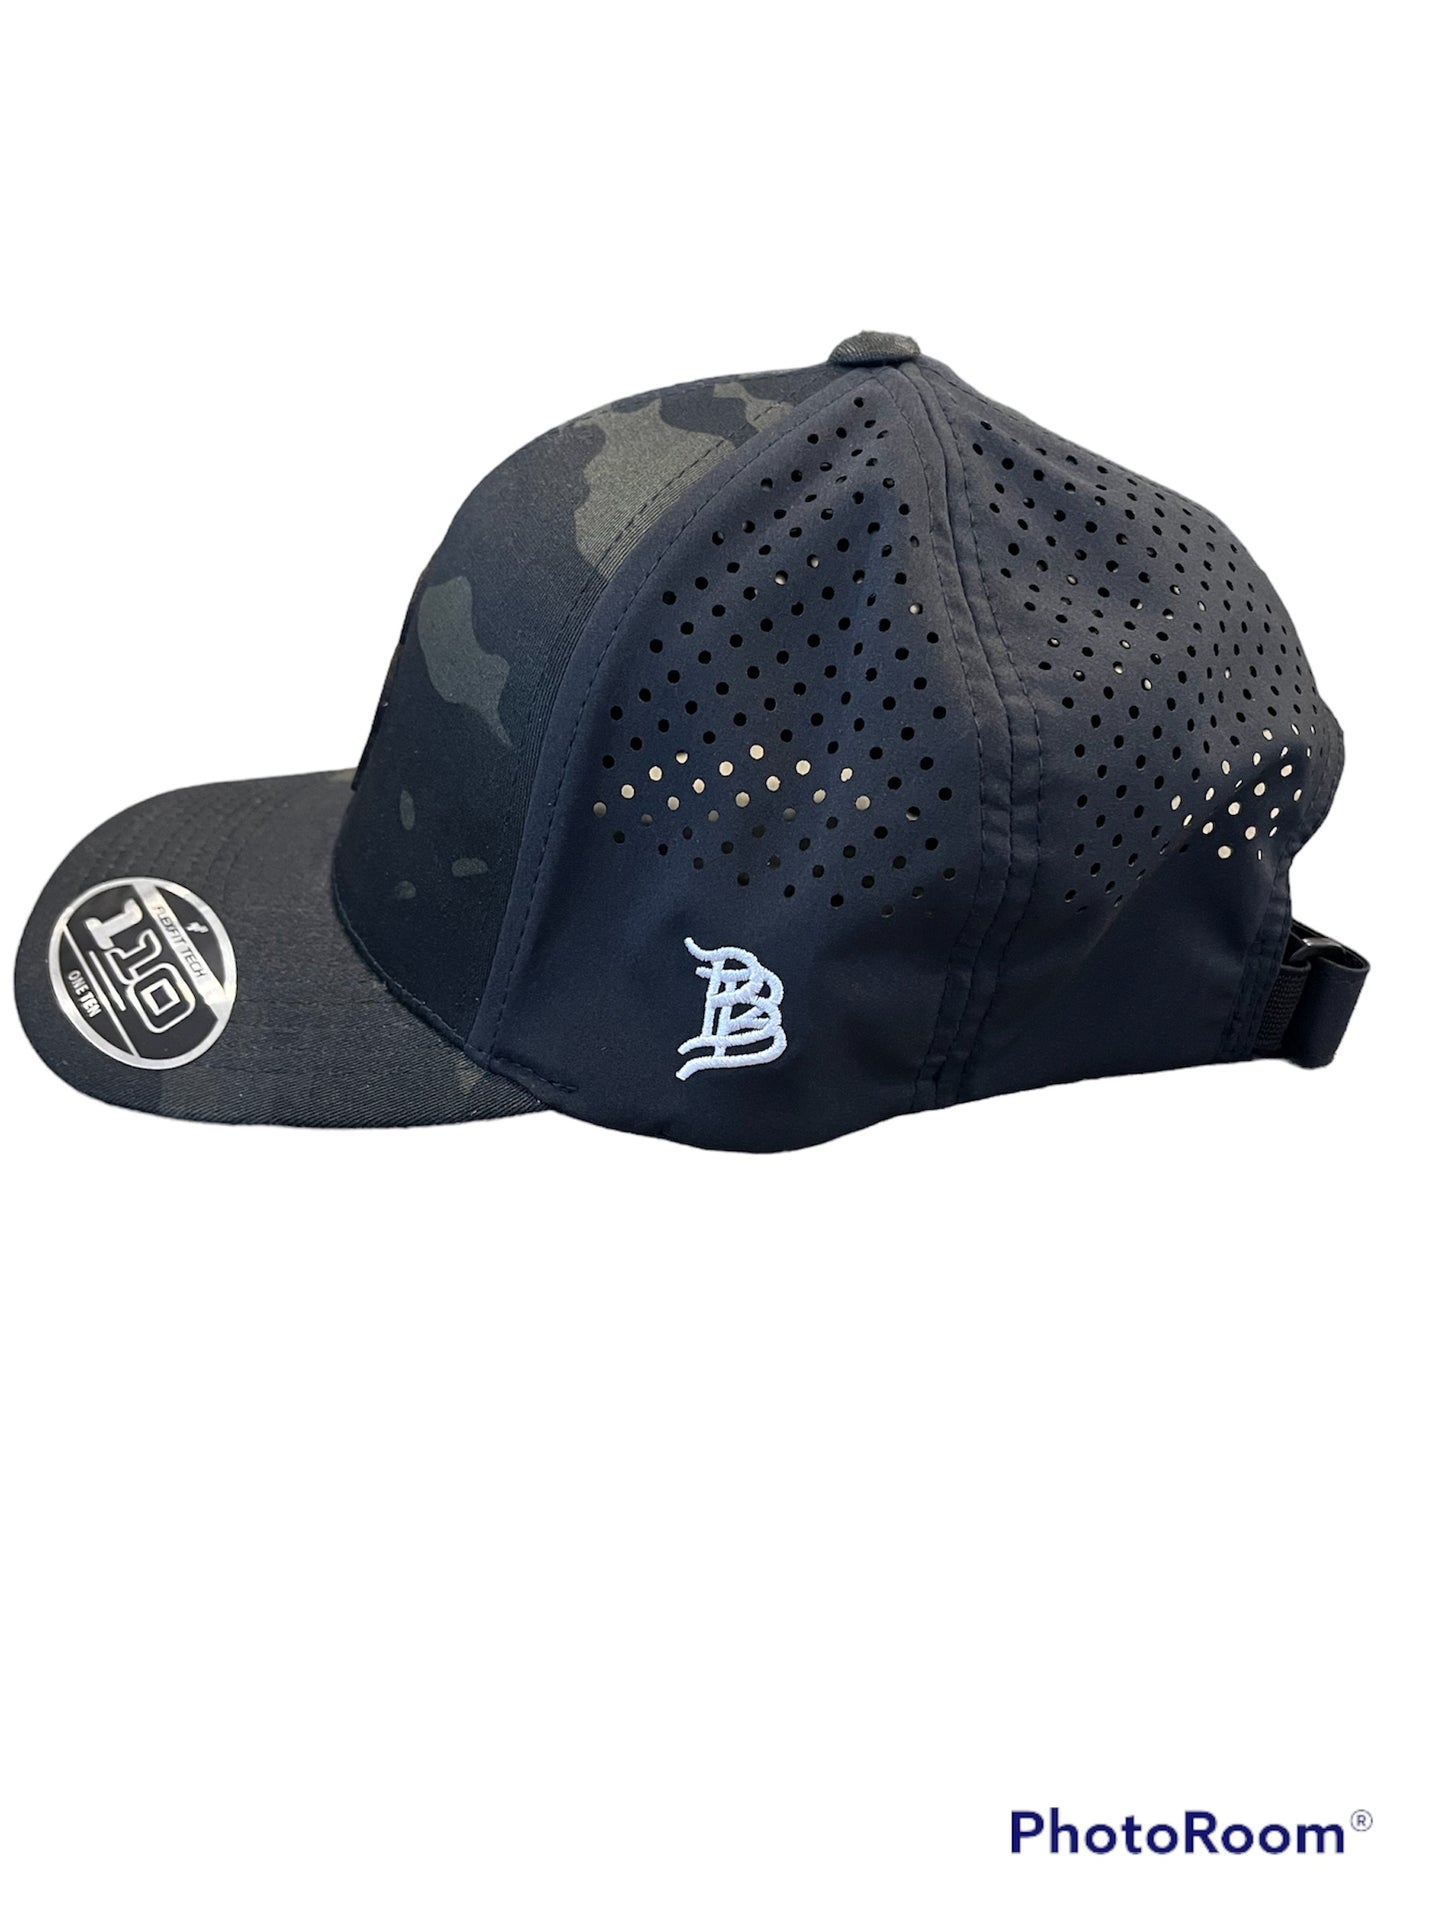 Branded Bills Curved Camo Hockey Club Leather Shamrock Hat